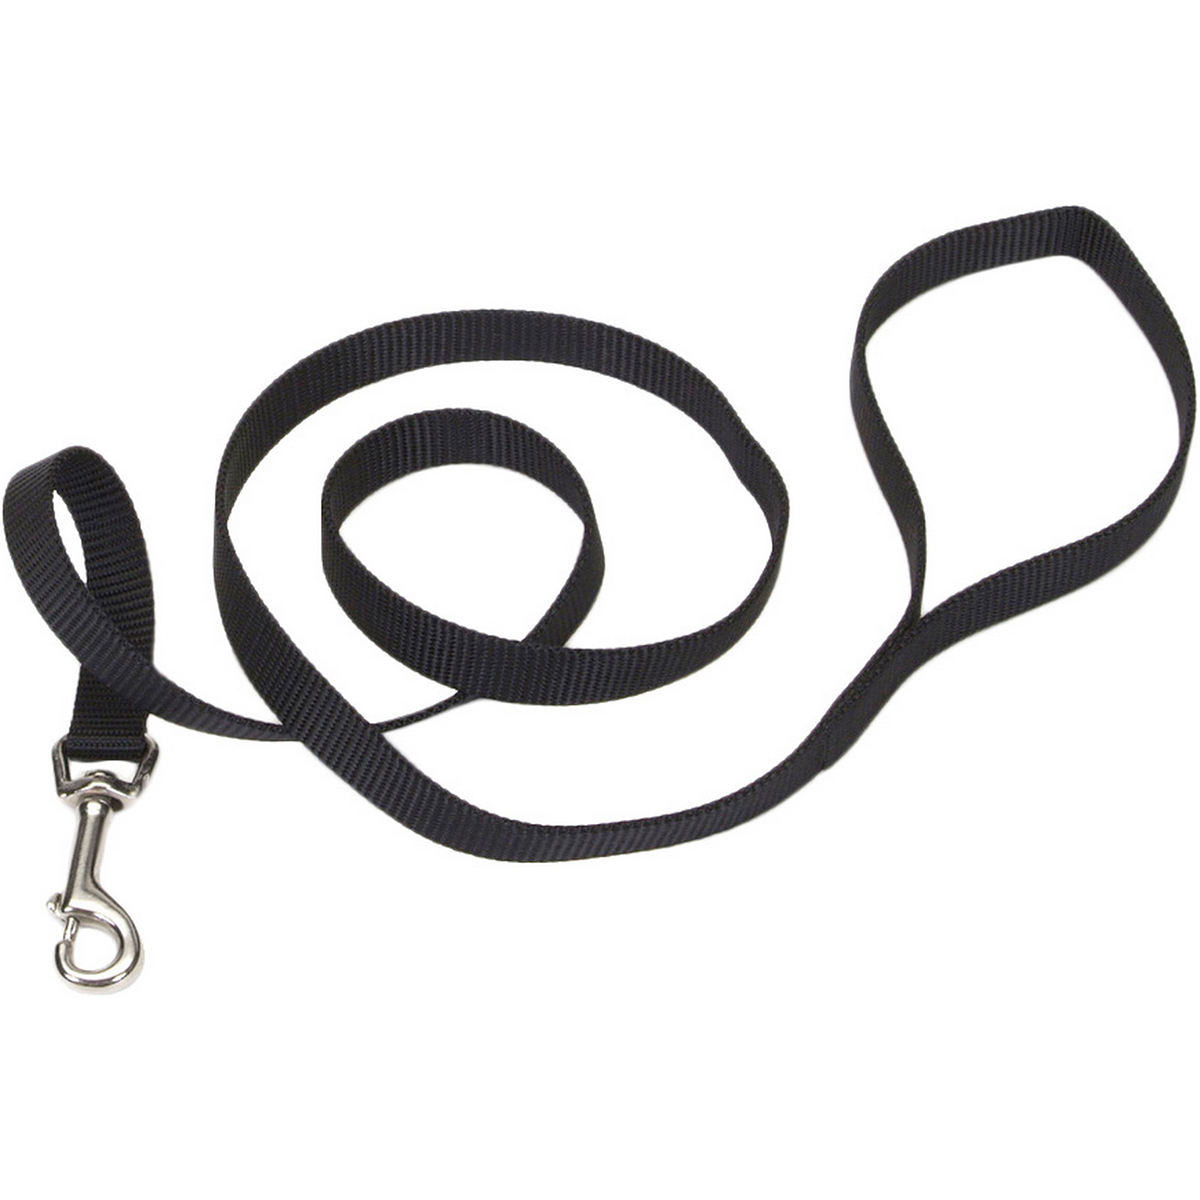 00406-blk06 0.62 In. X 6 Ft. Single-ply Nylon Training Dog Leash, Black